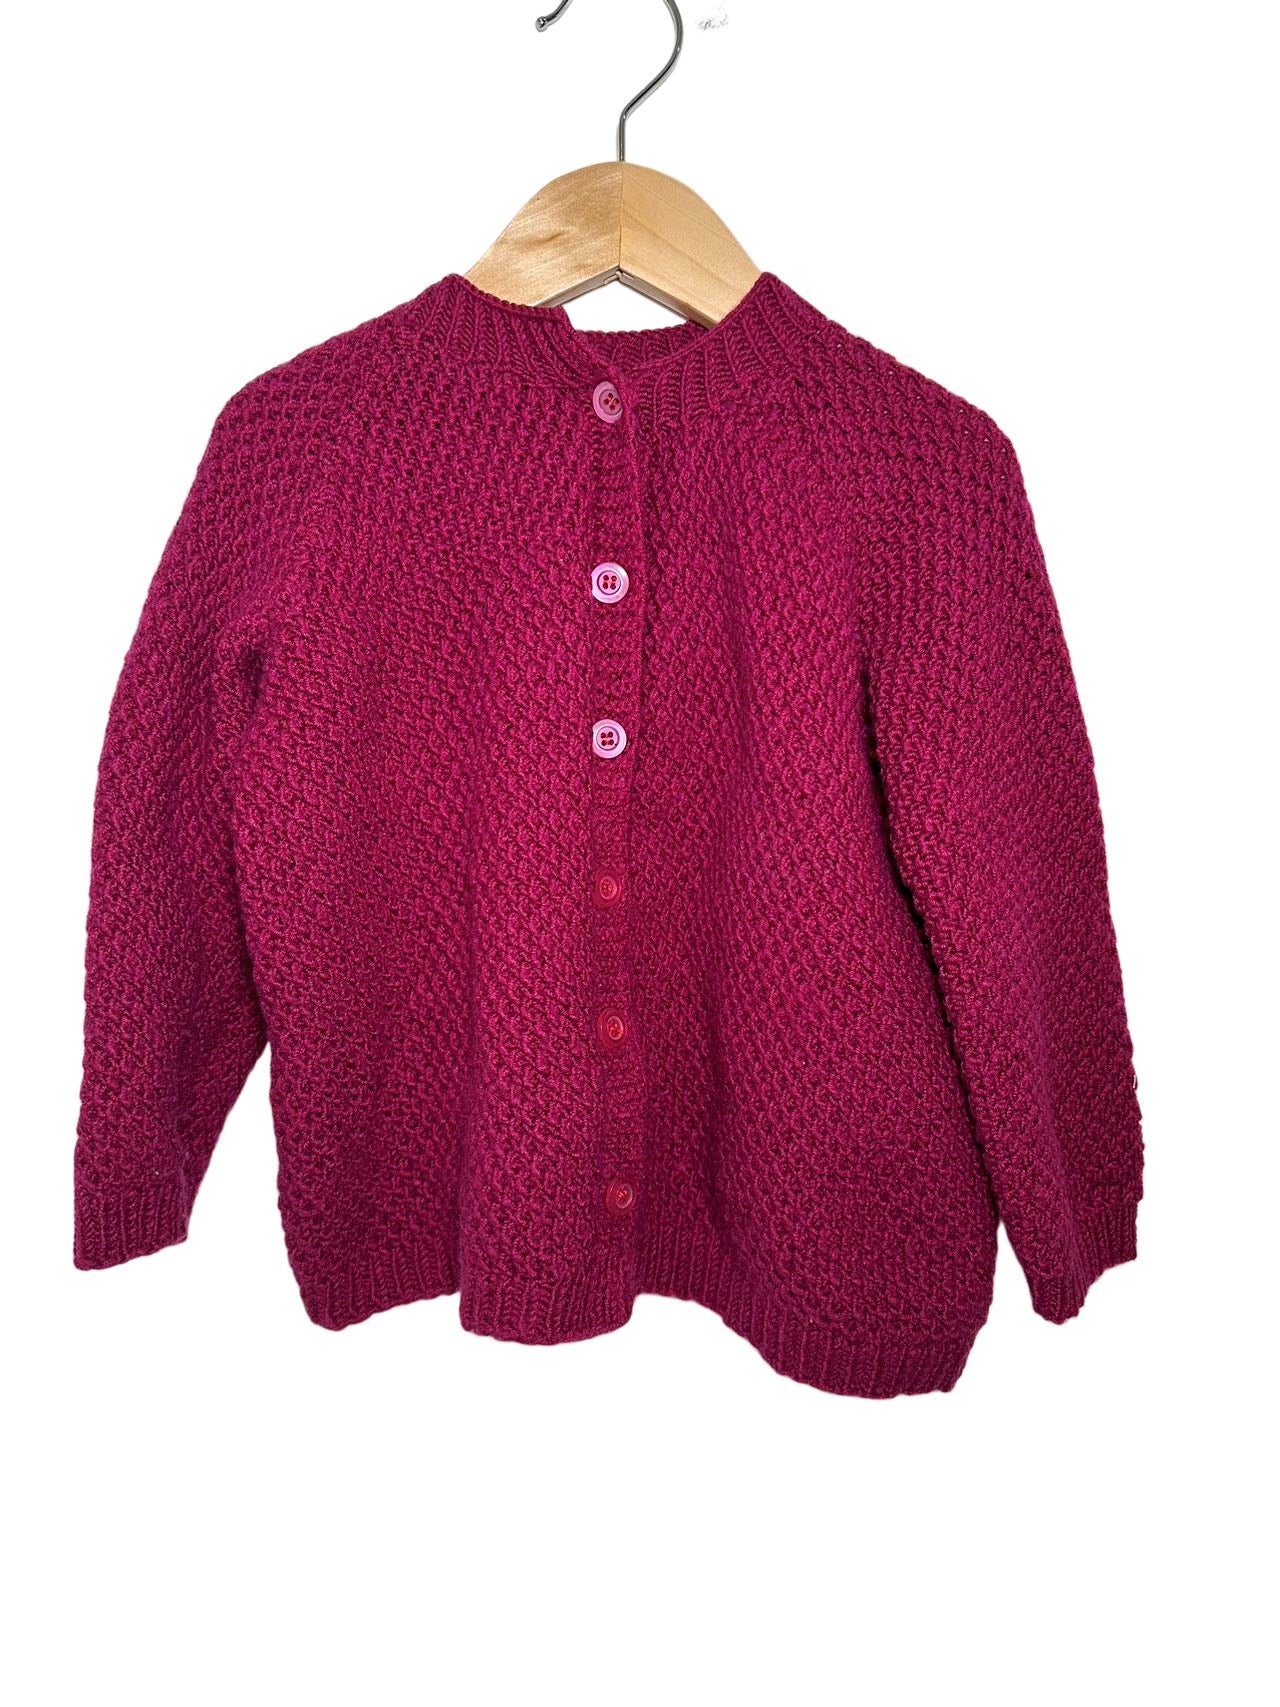 Handmade sweater(4Y)